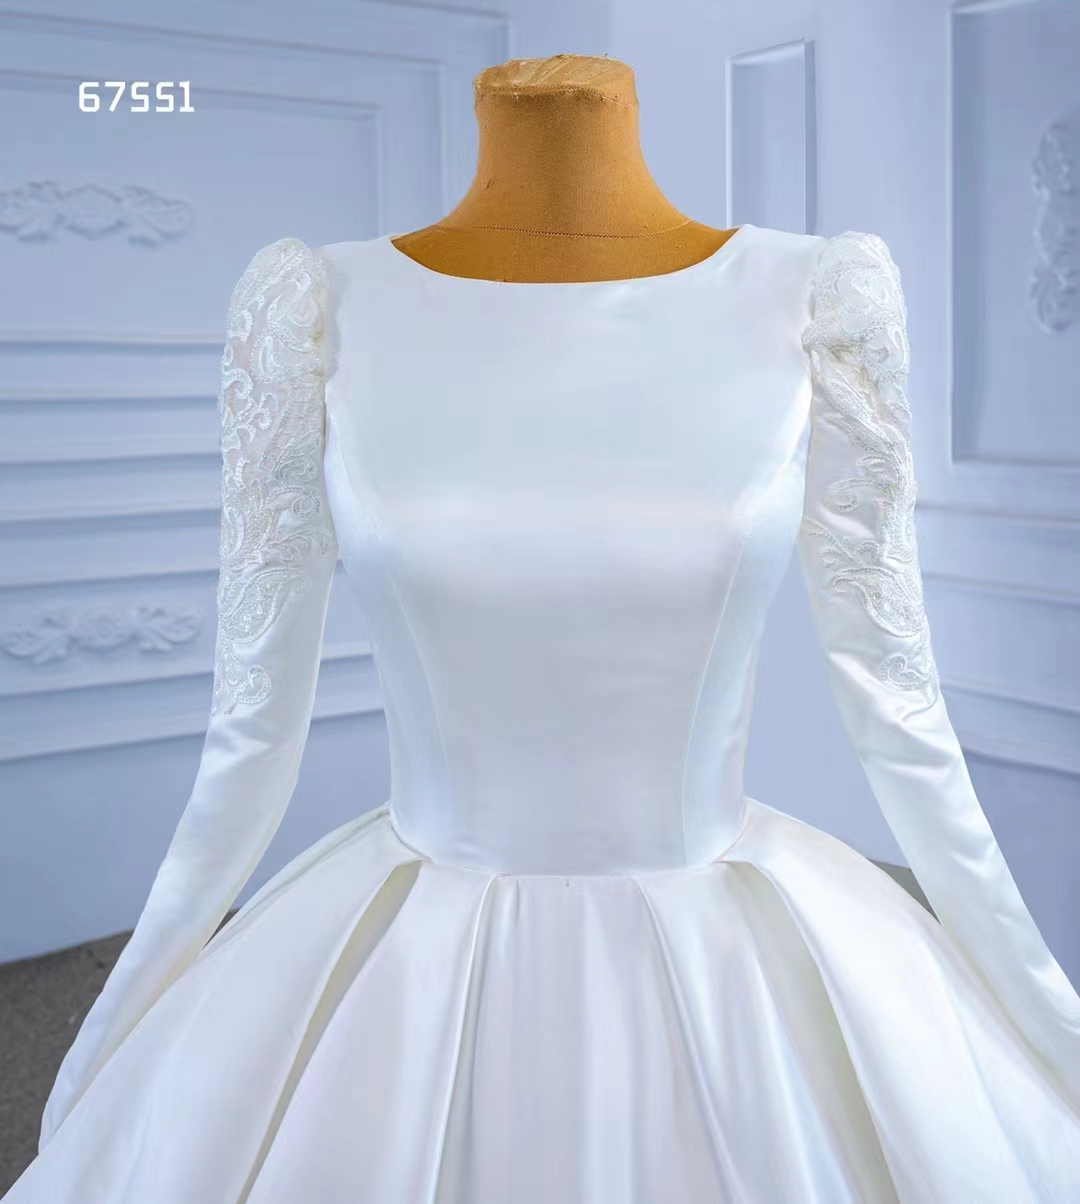 Vestido de fiesta simple Vestidos de novia Apliques O-cuello Manga larga Blanco SM67551